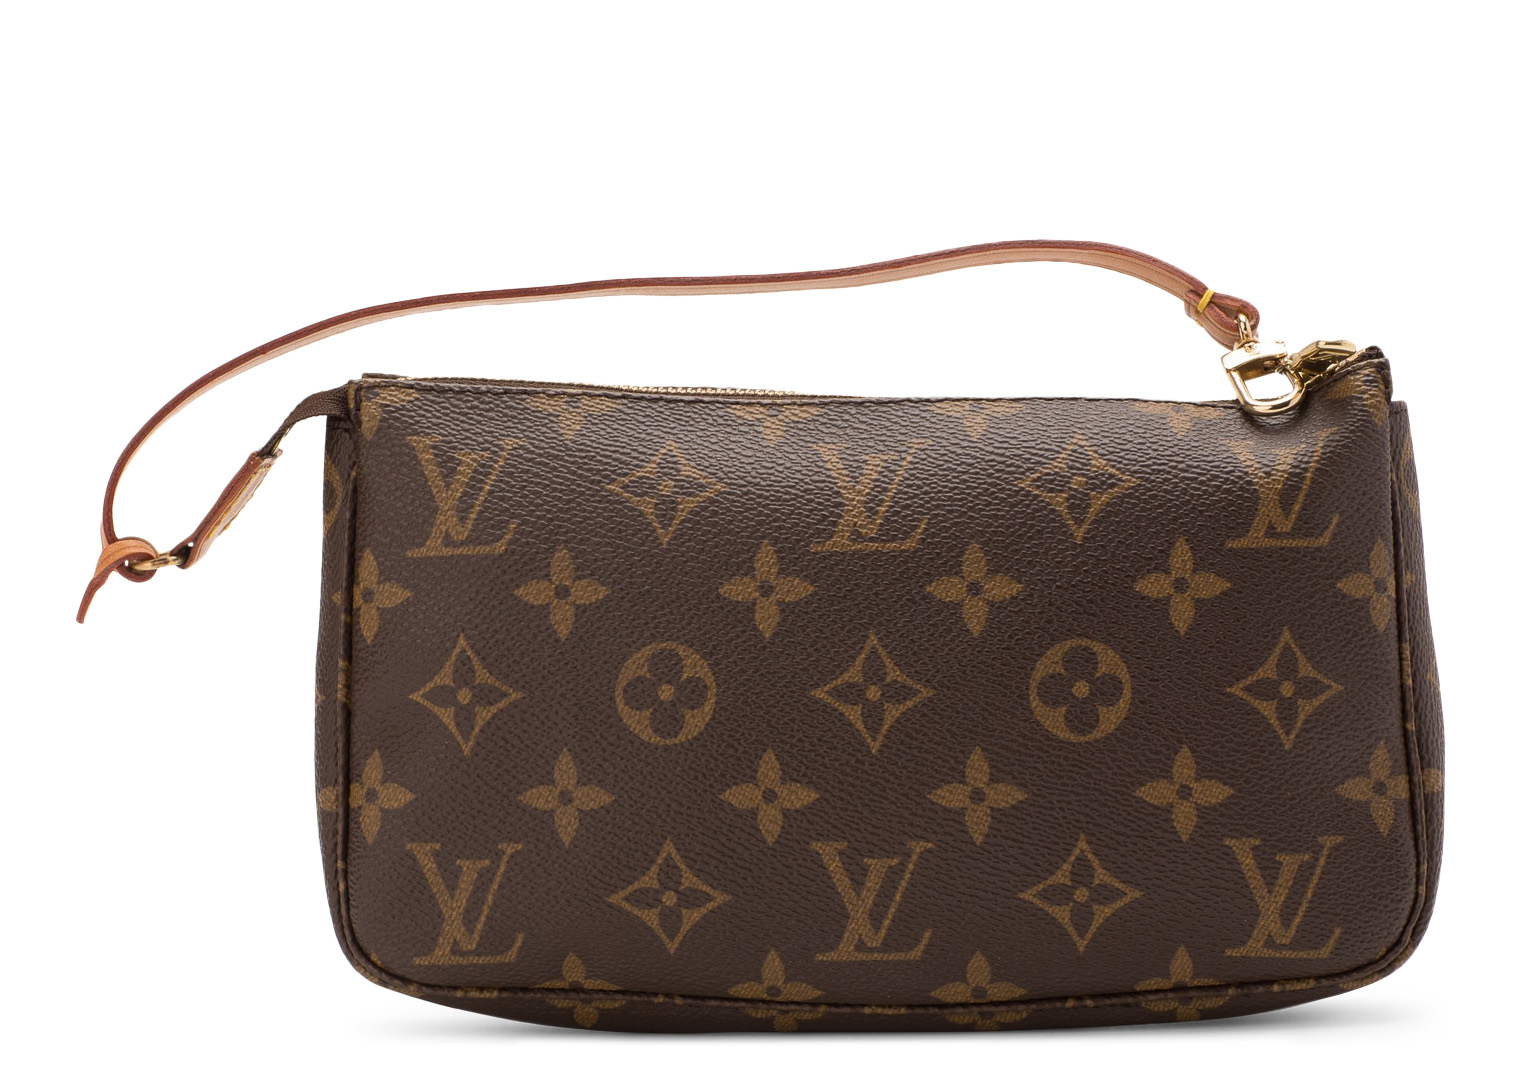 Louis Vuitton Pochette Accessories Damier Azur Shoulder Bag  eBay